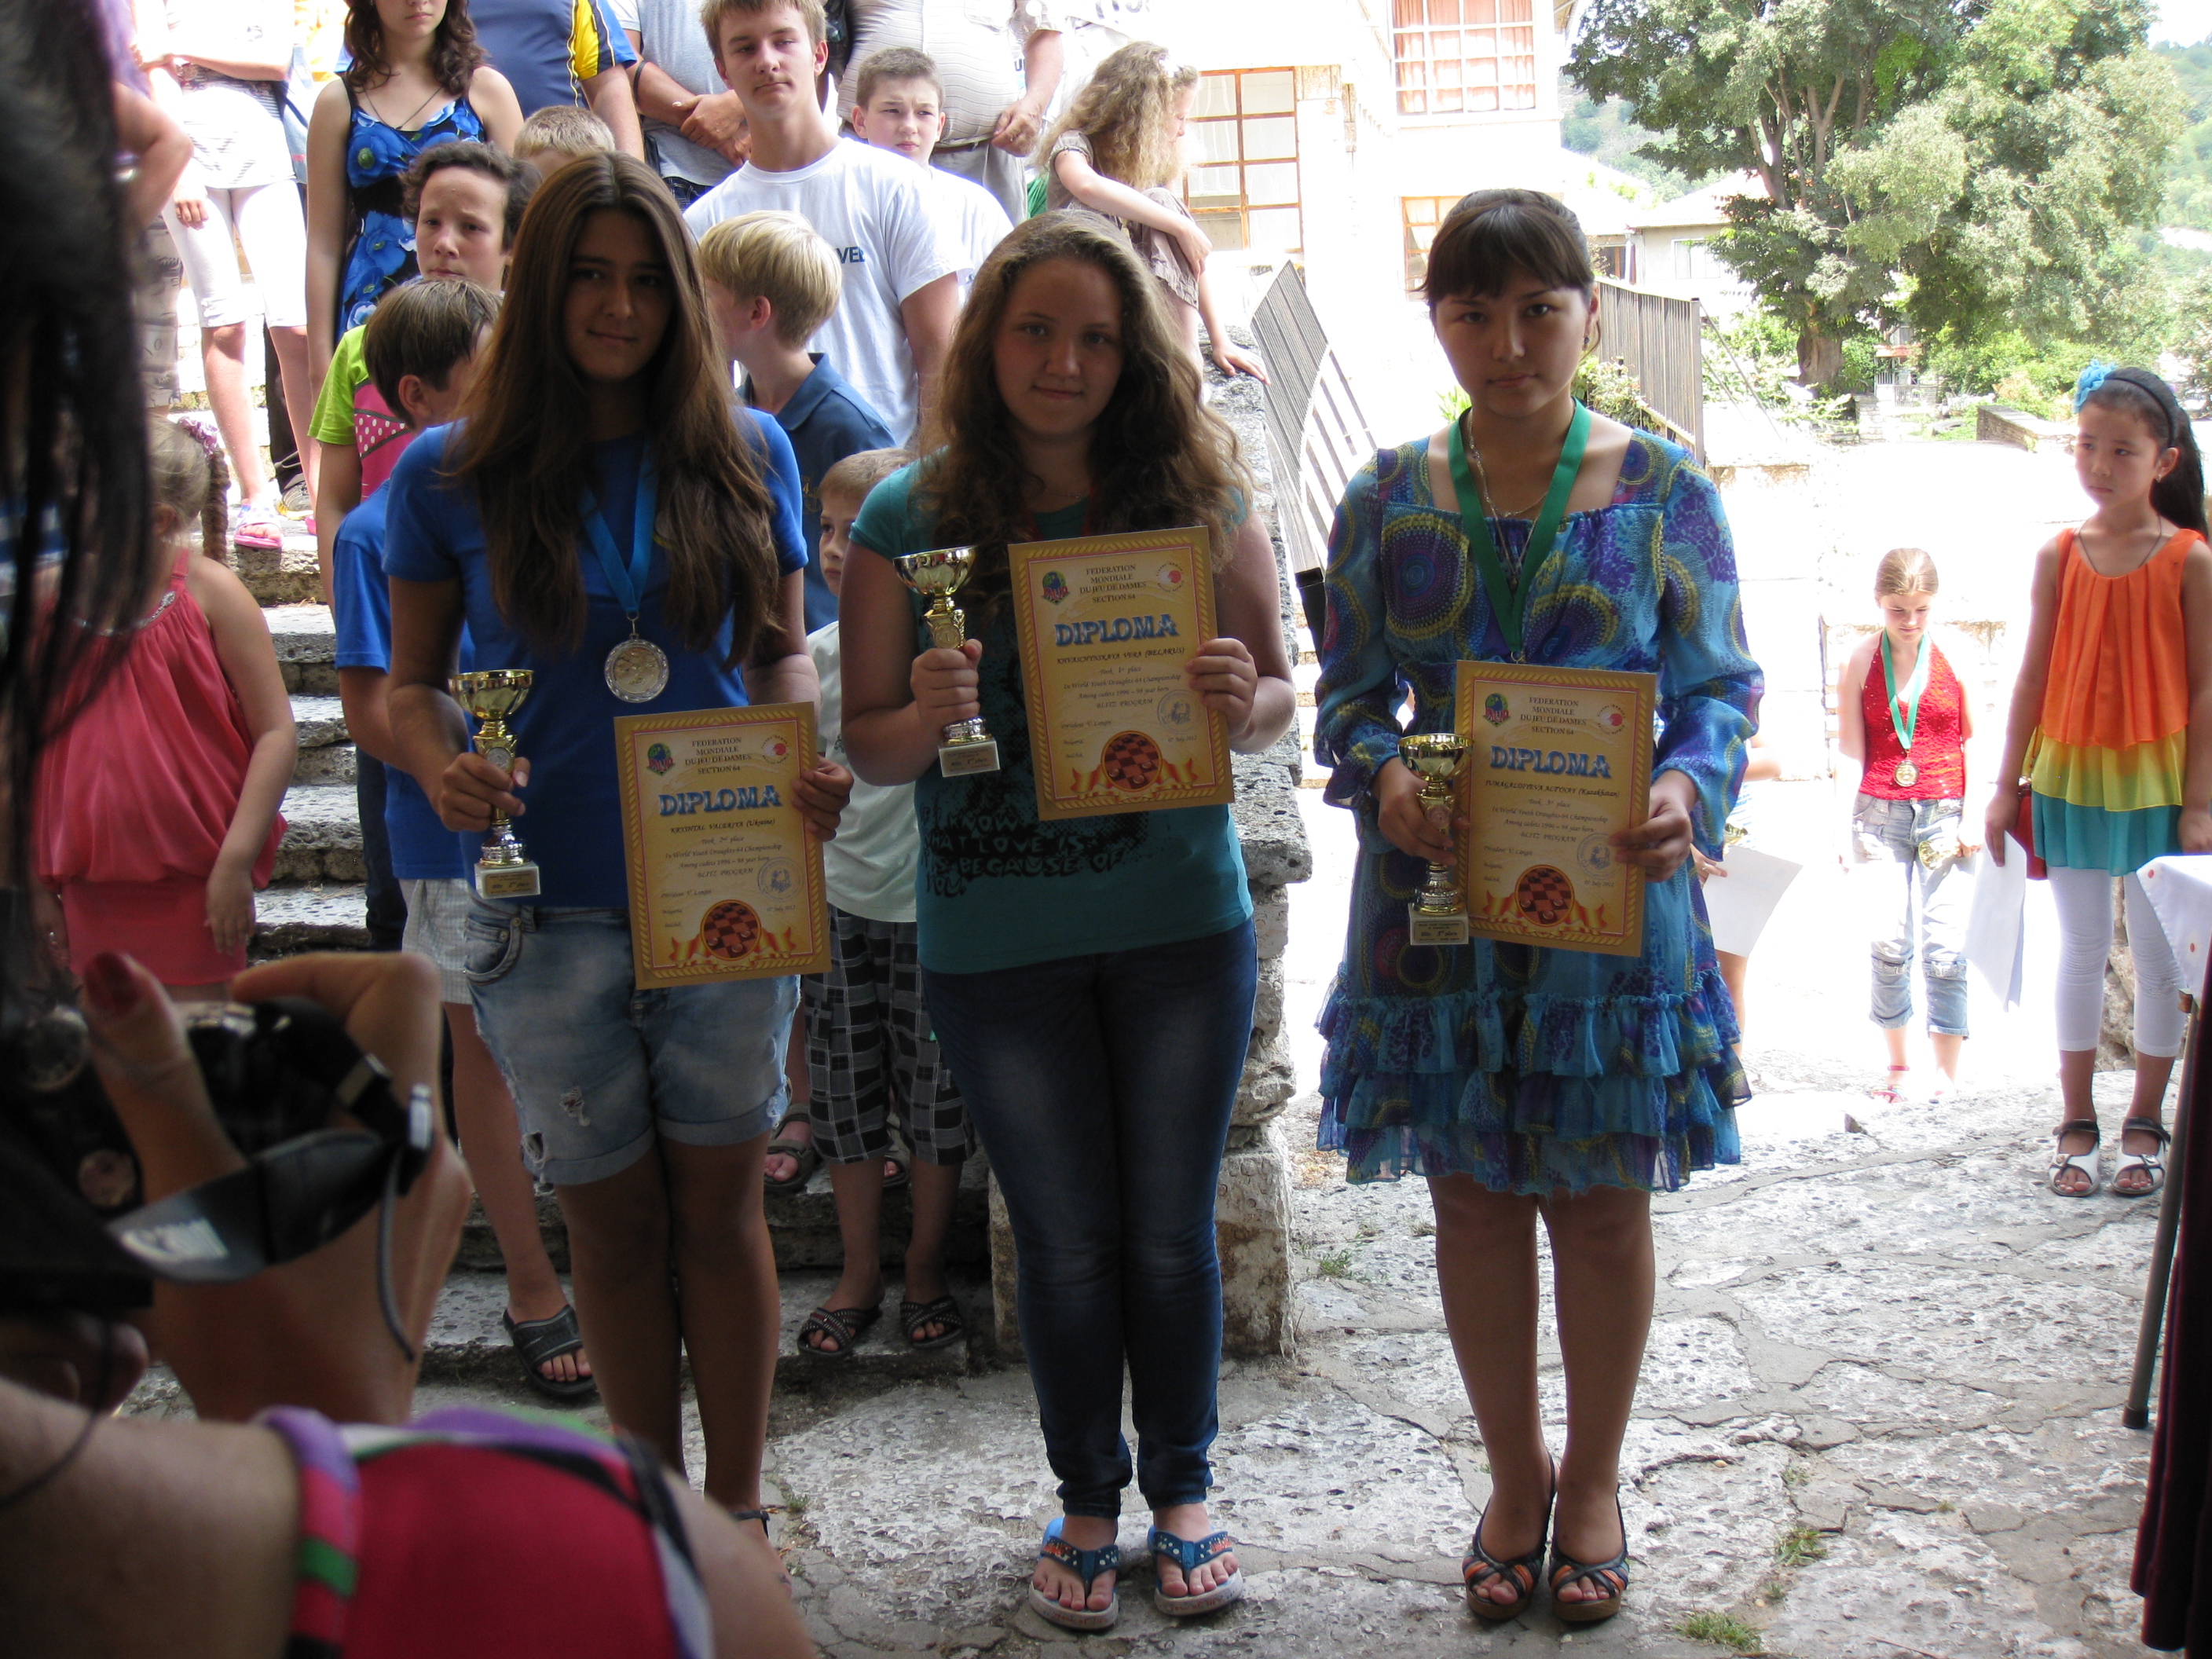        -   - World Youth Championship in Balchik, Bulgaria 6-15.07.2012 - IMG_3038 - IMG_3038.JPG